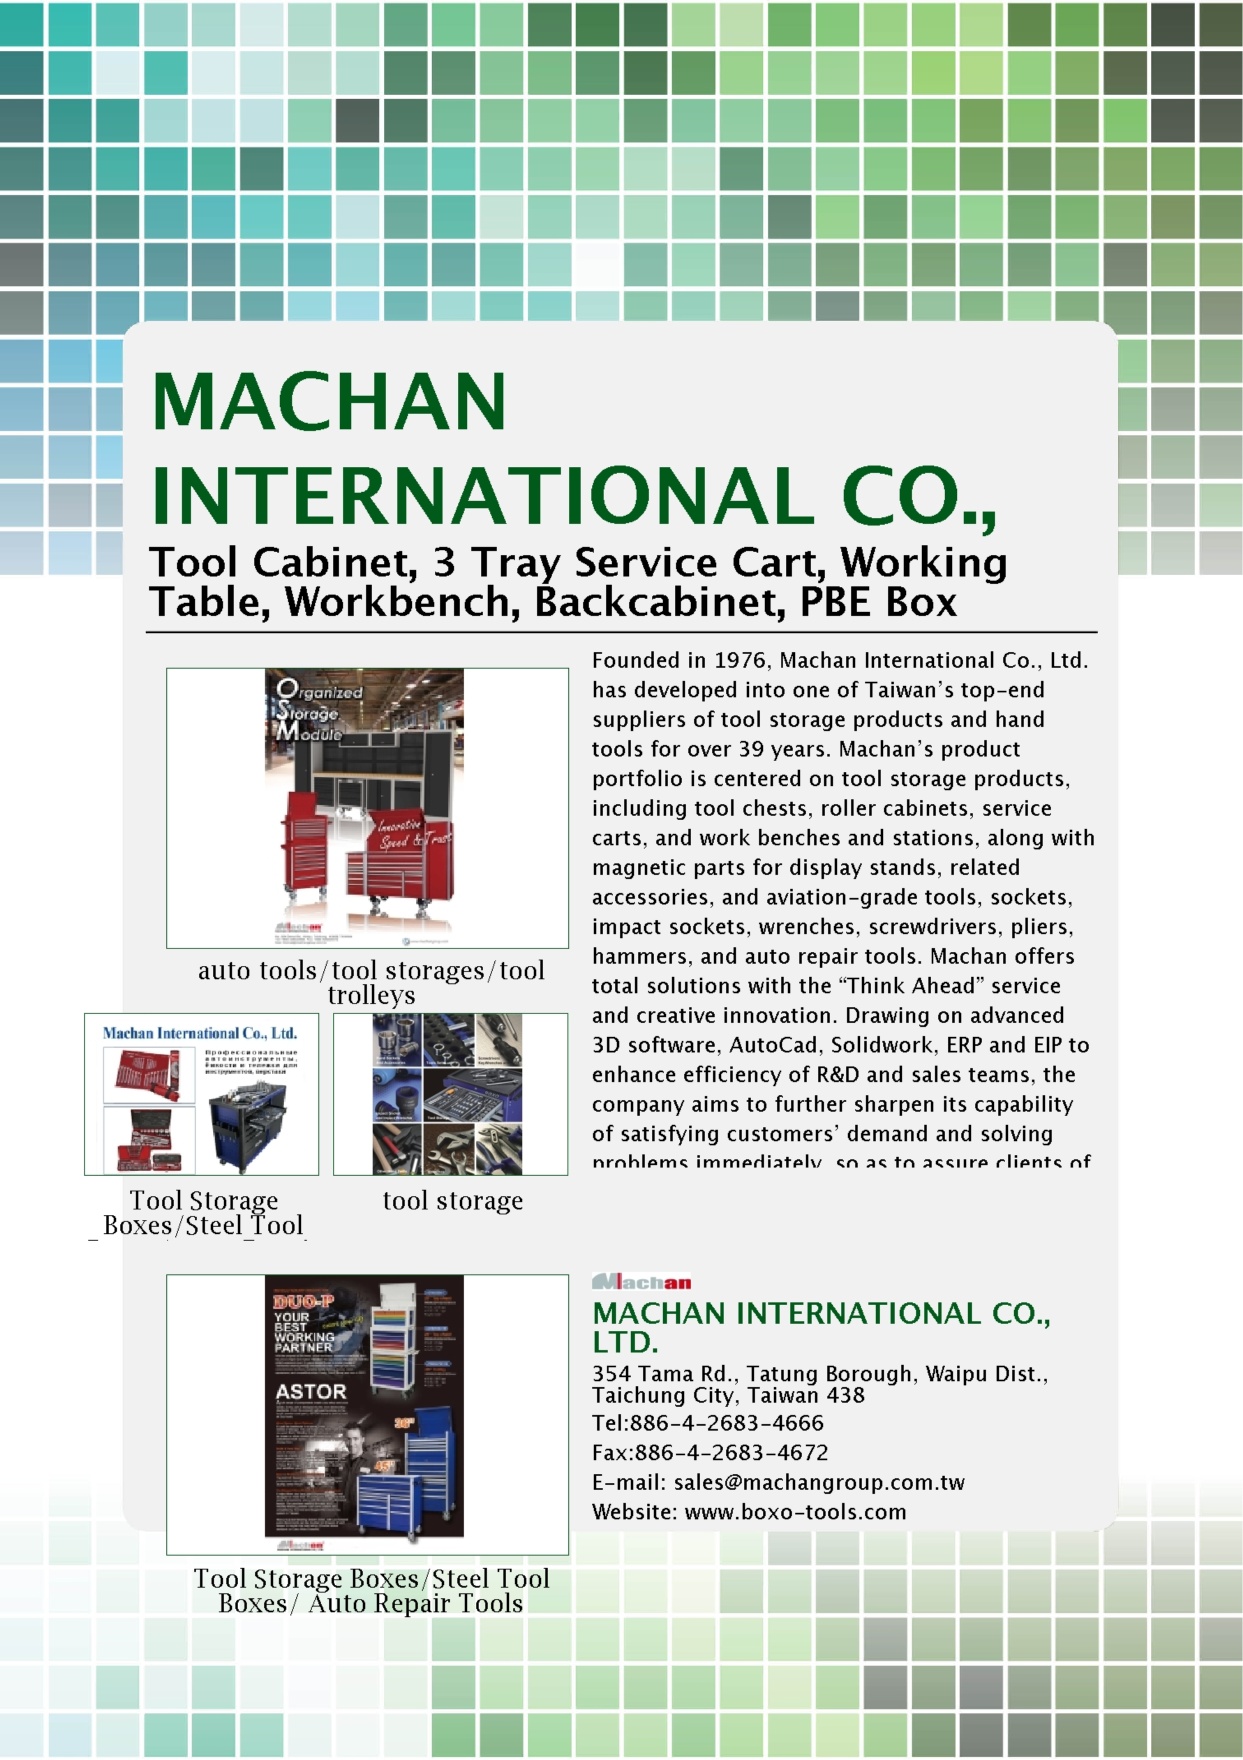 MACHAN INTERNATIONAL CO., LTD.